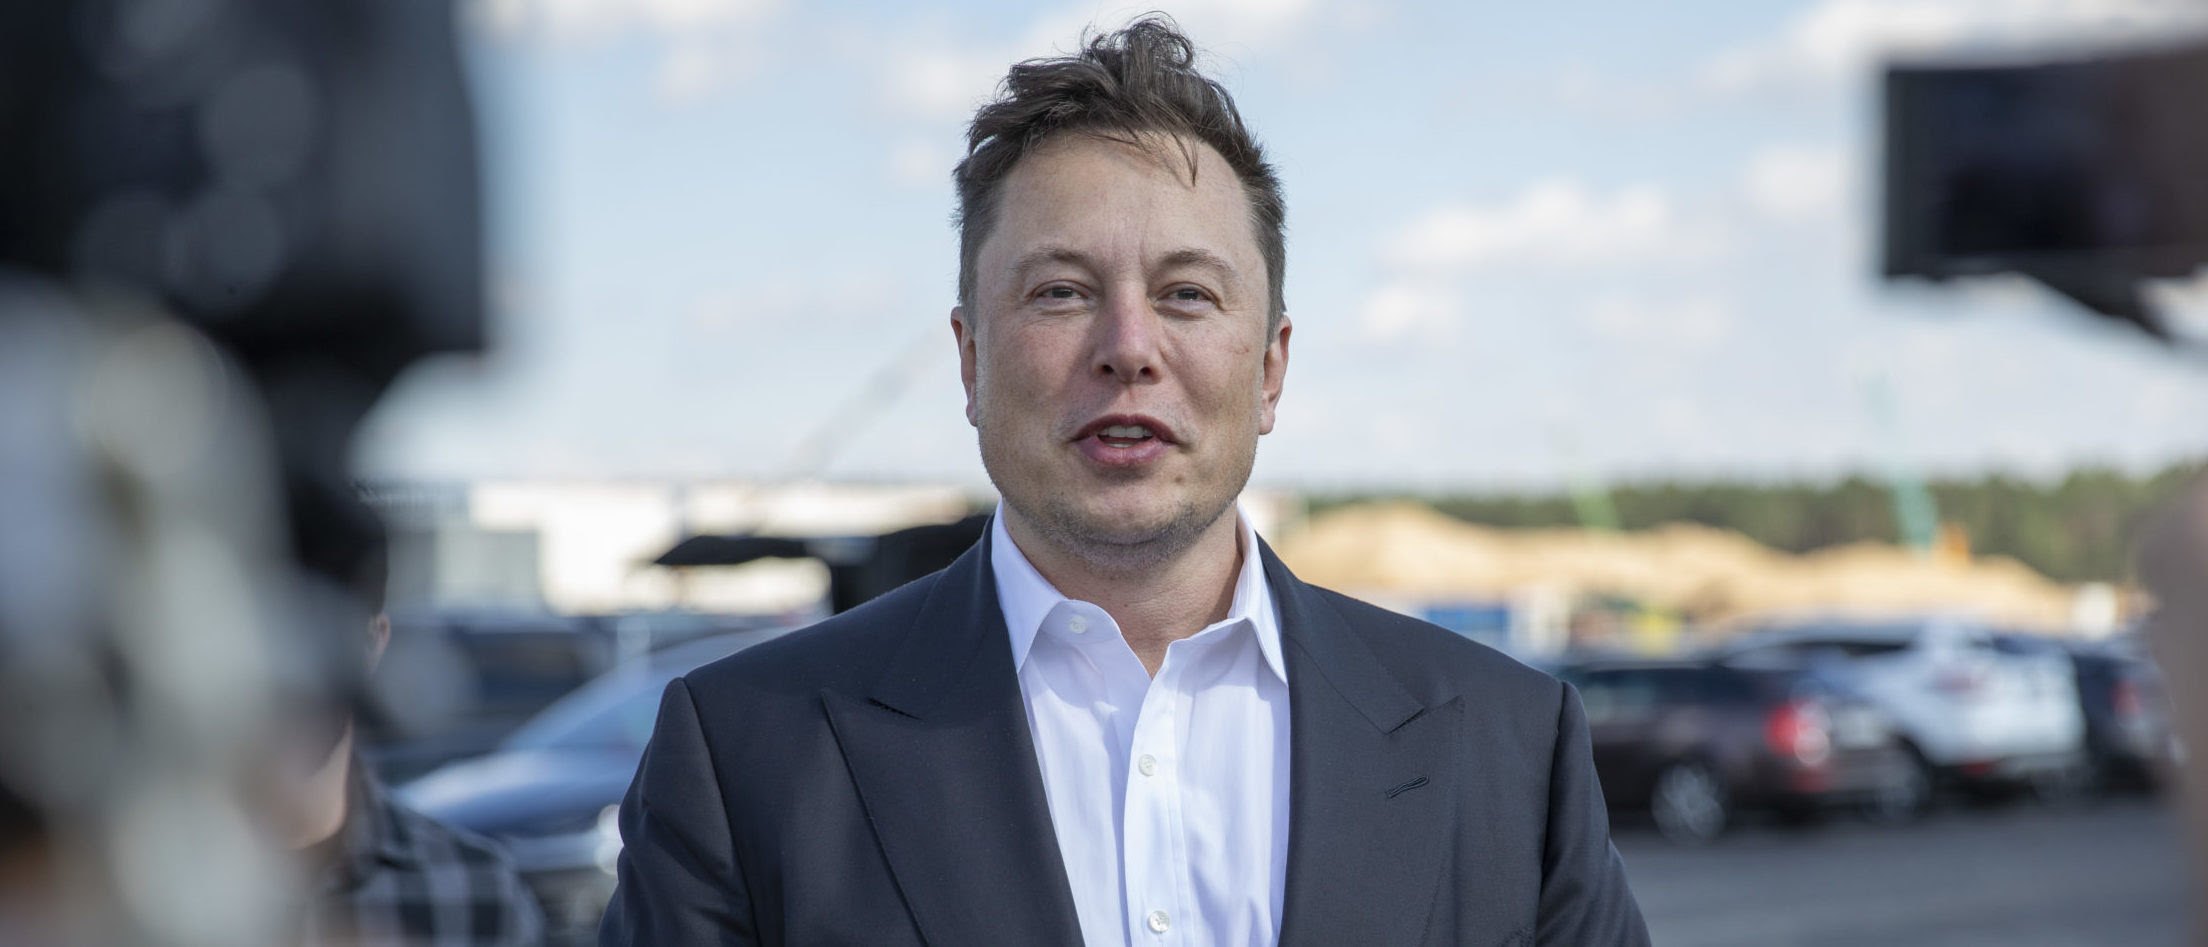 Elon Musk Slams Biden For Ignoring Tesla, Says He Would Behave At White House